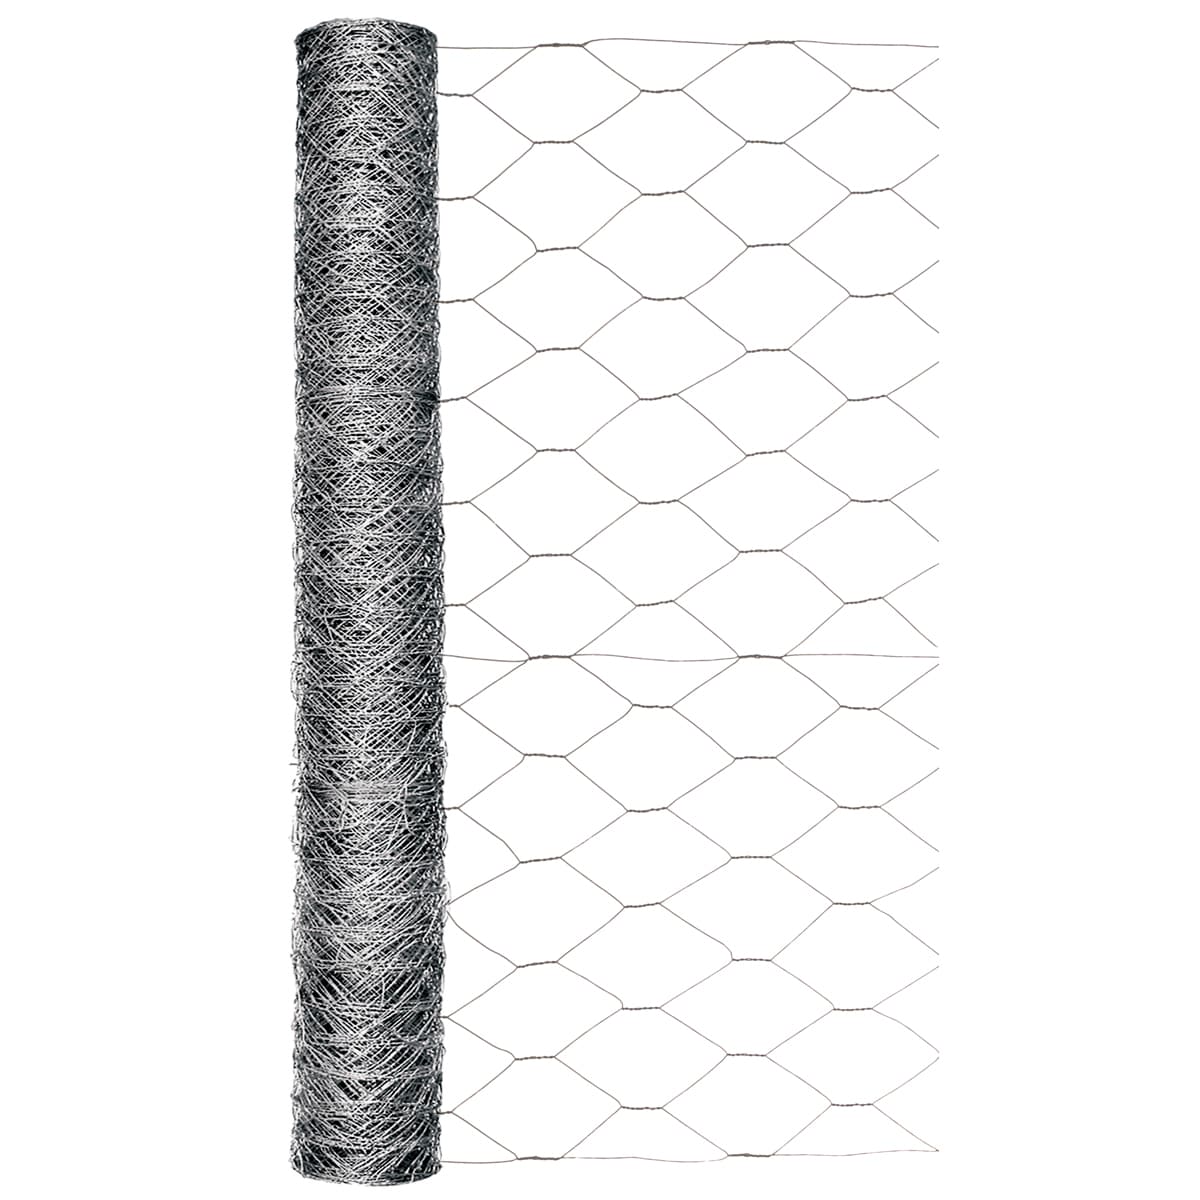 Poultry Hexagonal Fence Plastic Stretch Breeding Chicken Net